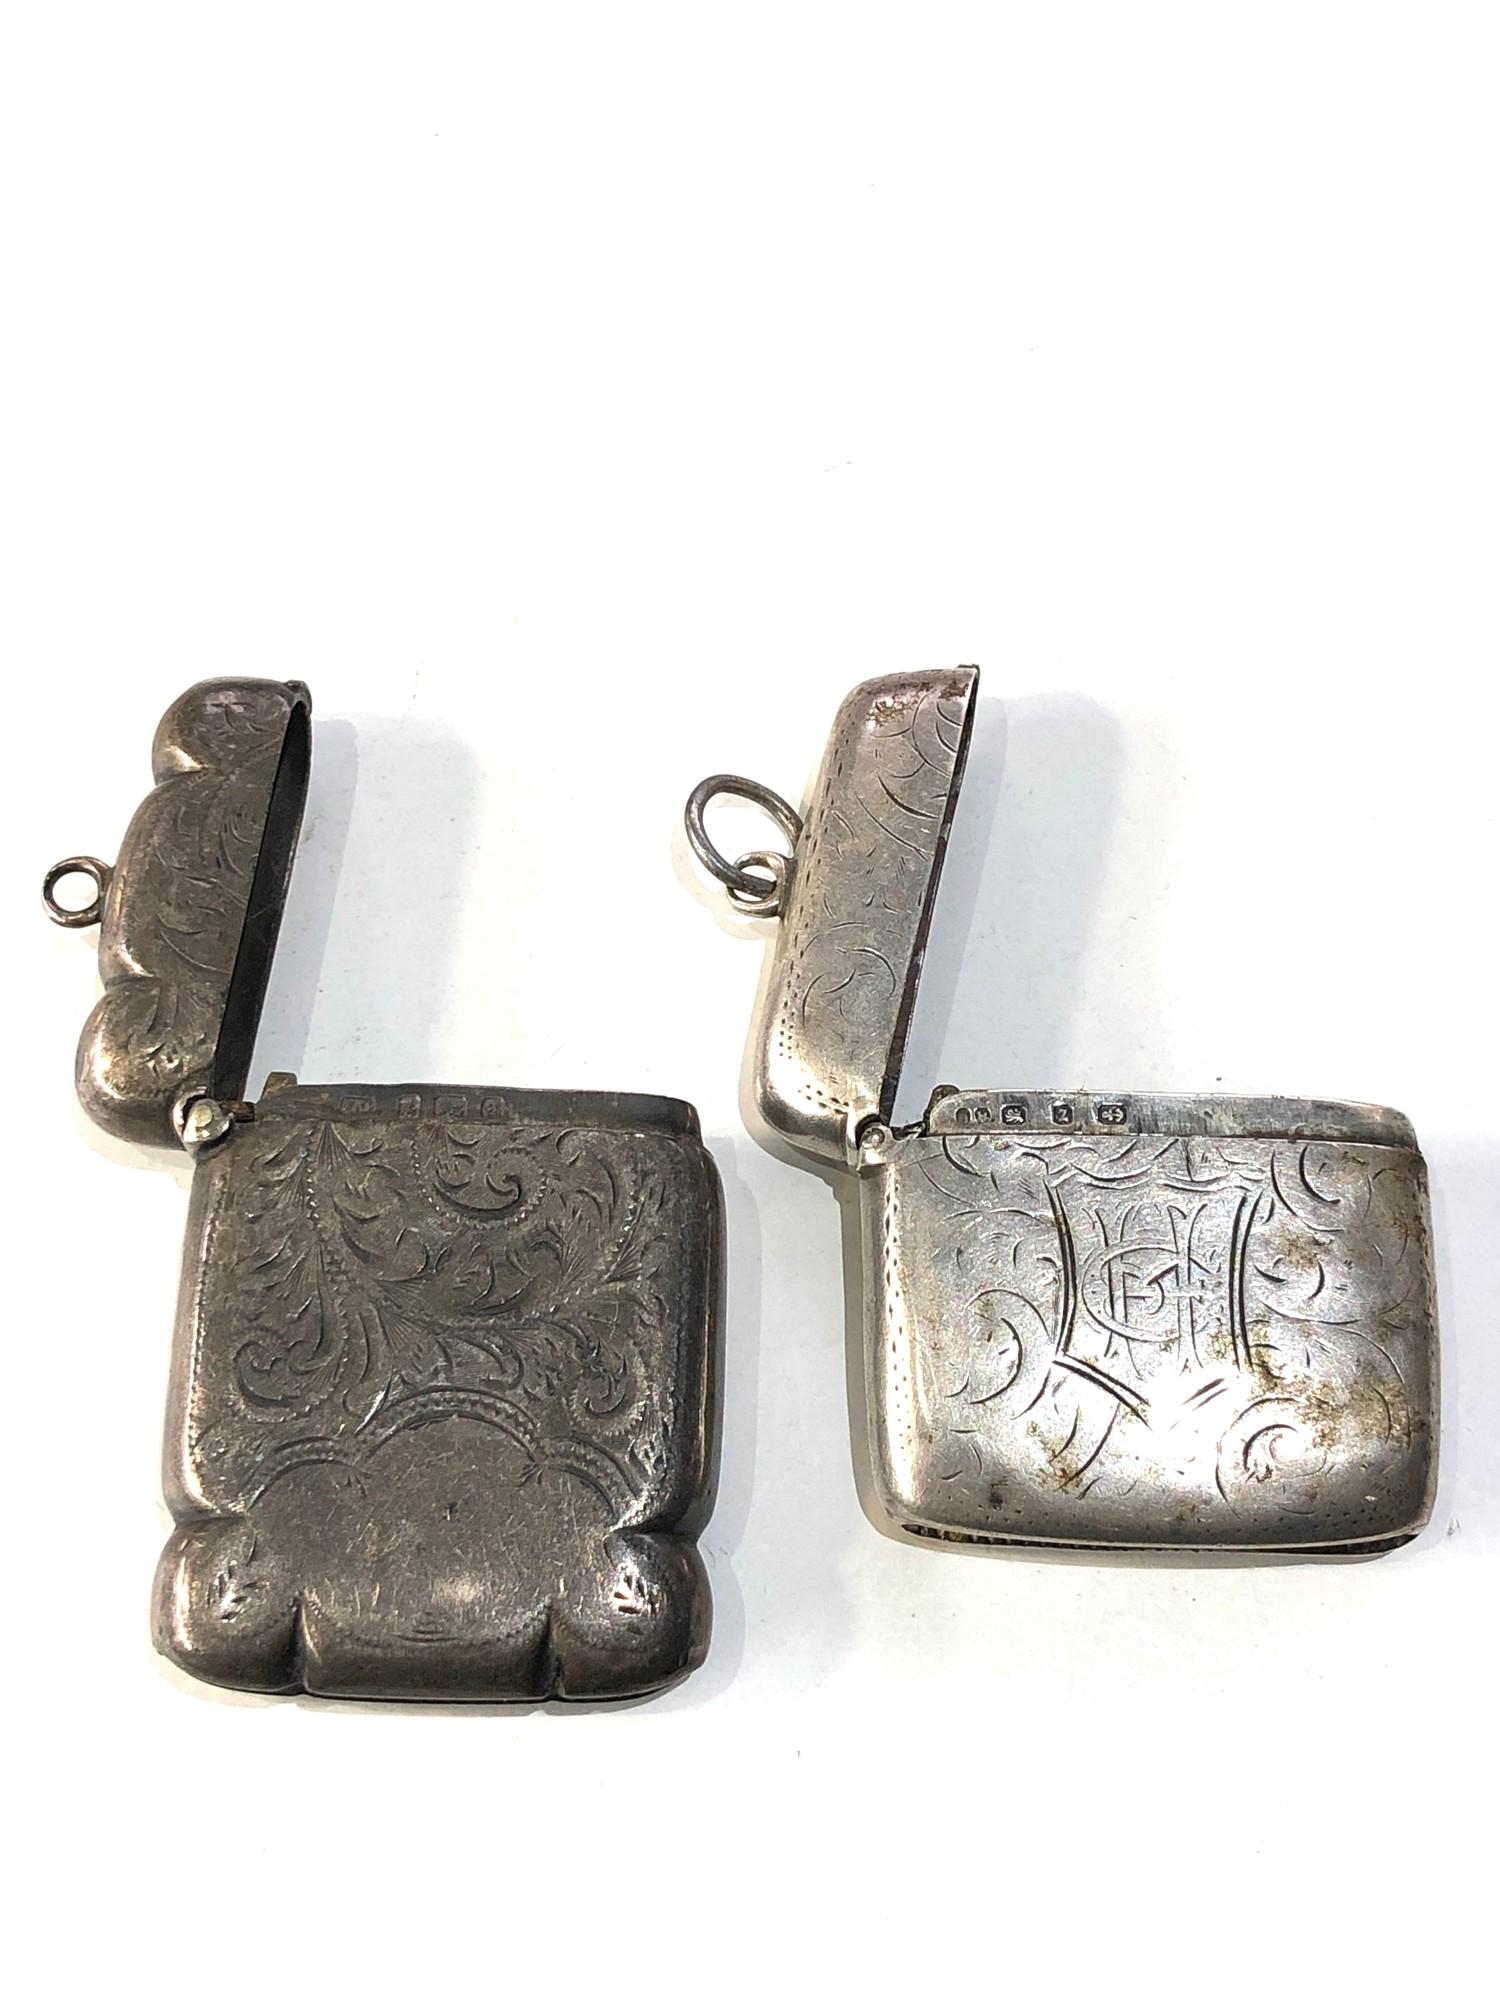 2 antique silver vesta / match strikers - Image 2 of 3